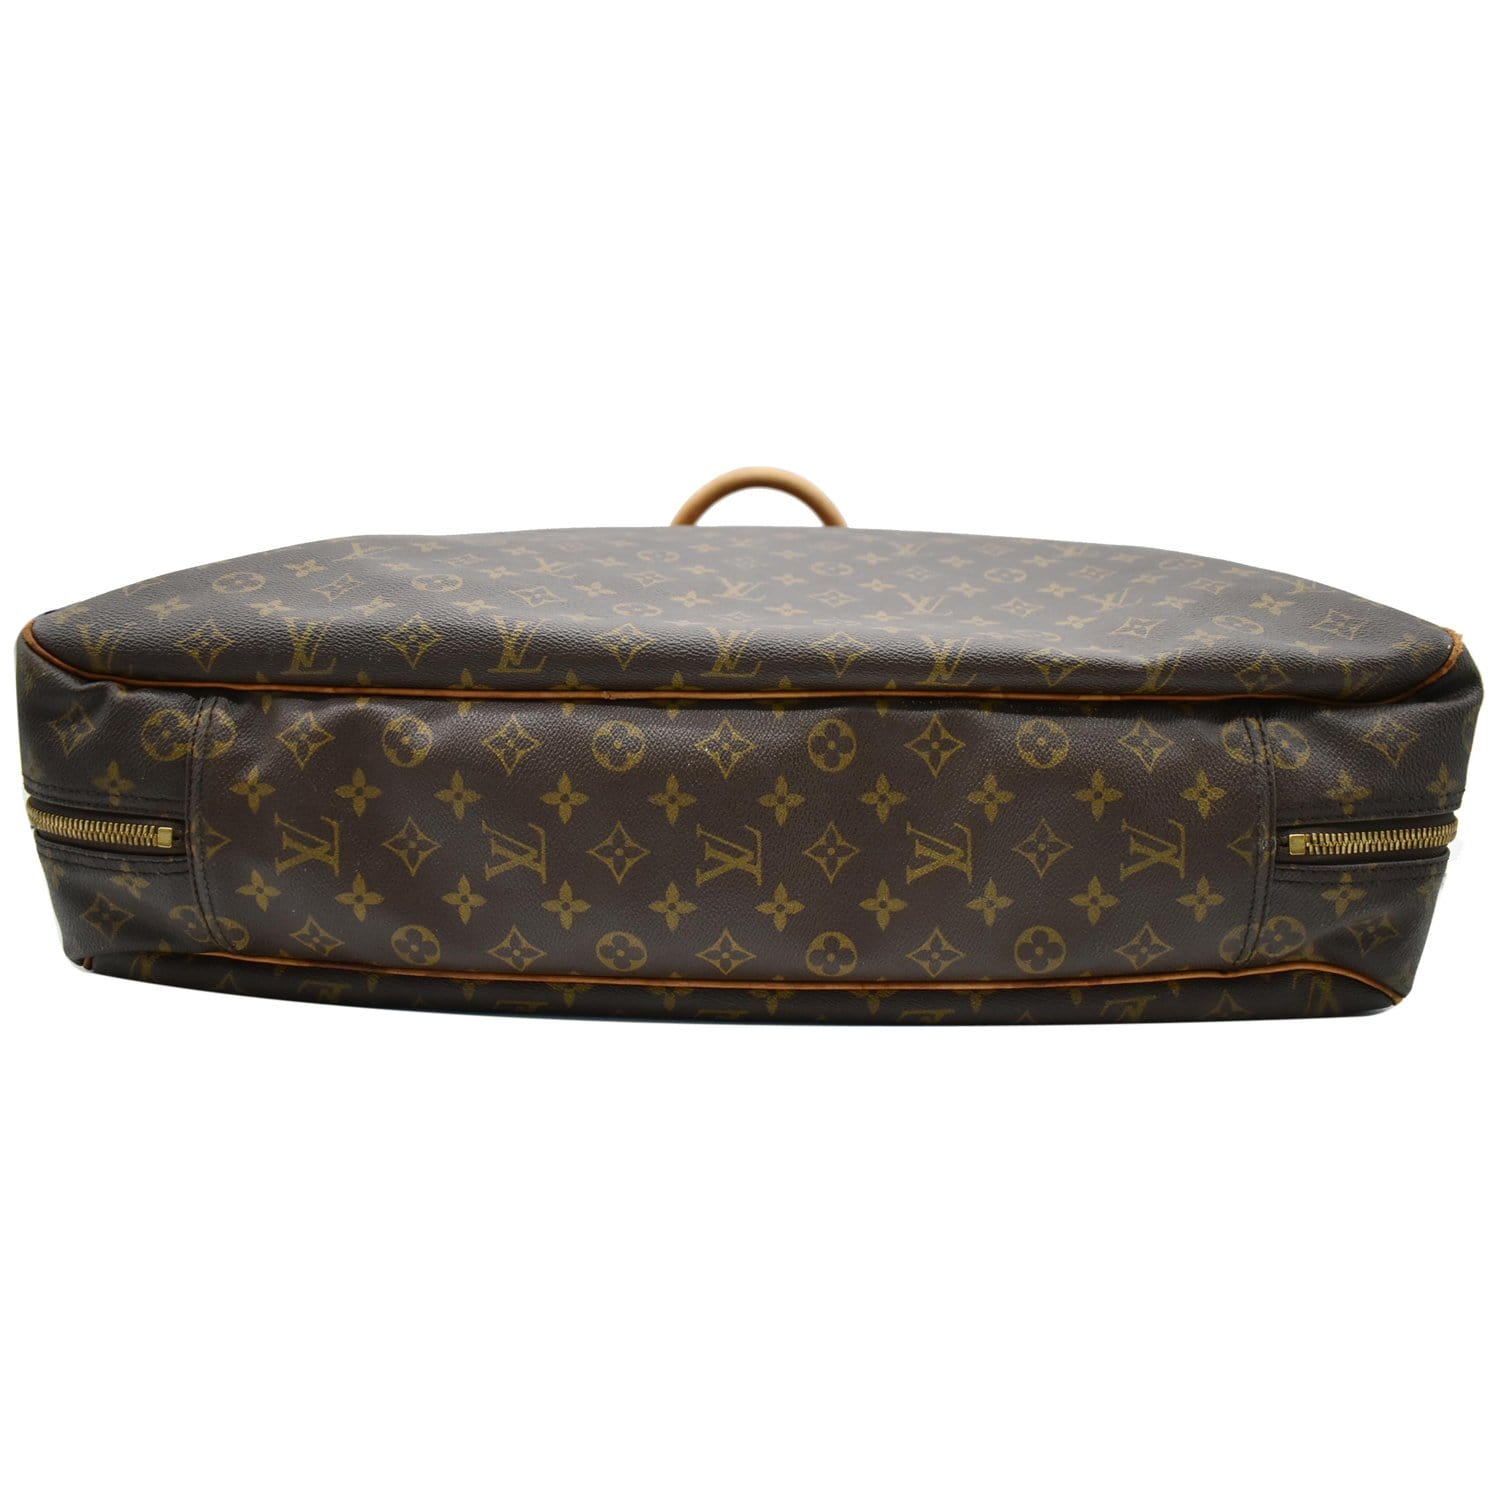 Louis Vuitton Alize de Poche Travel Bag with Luggage Tag